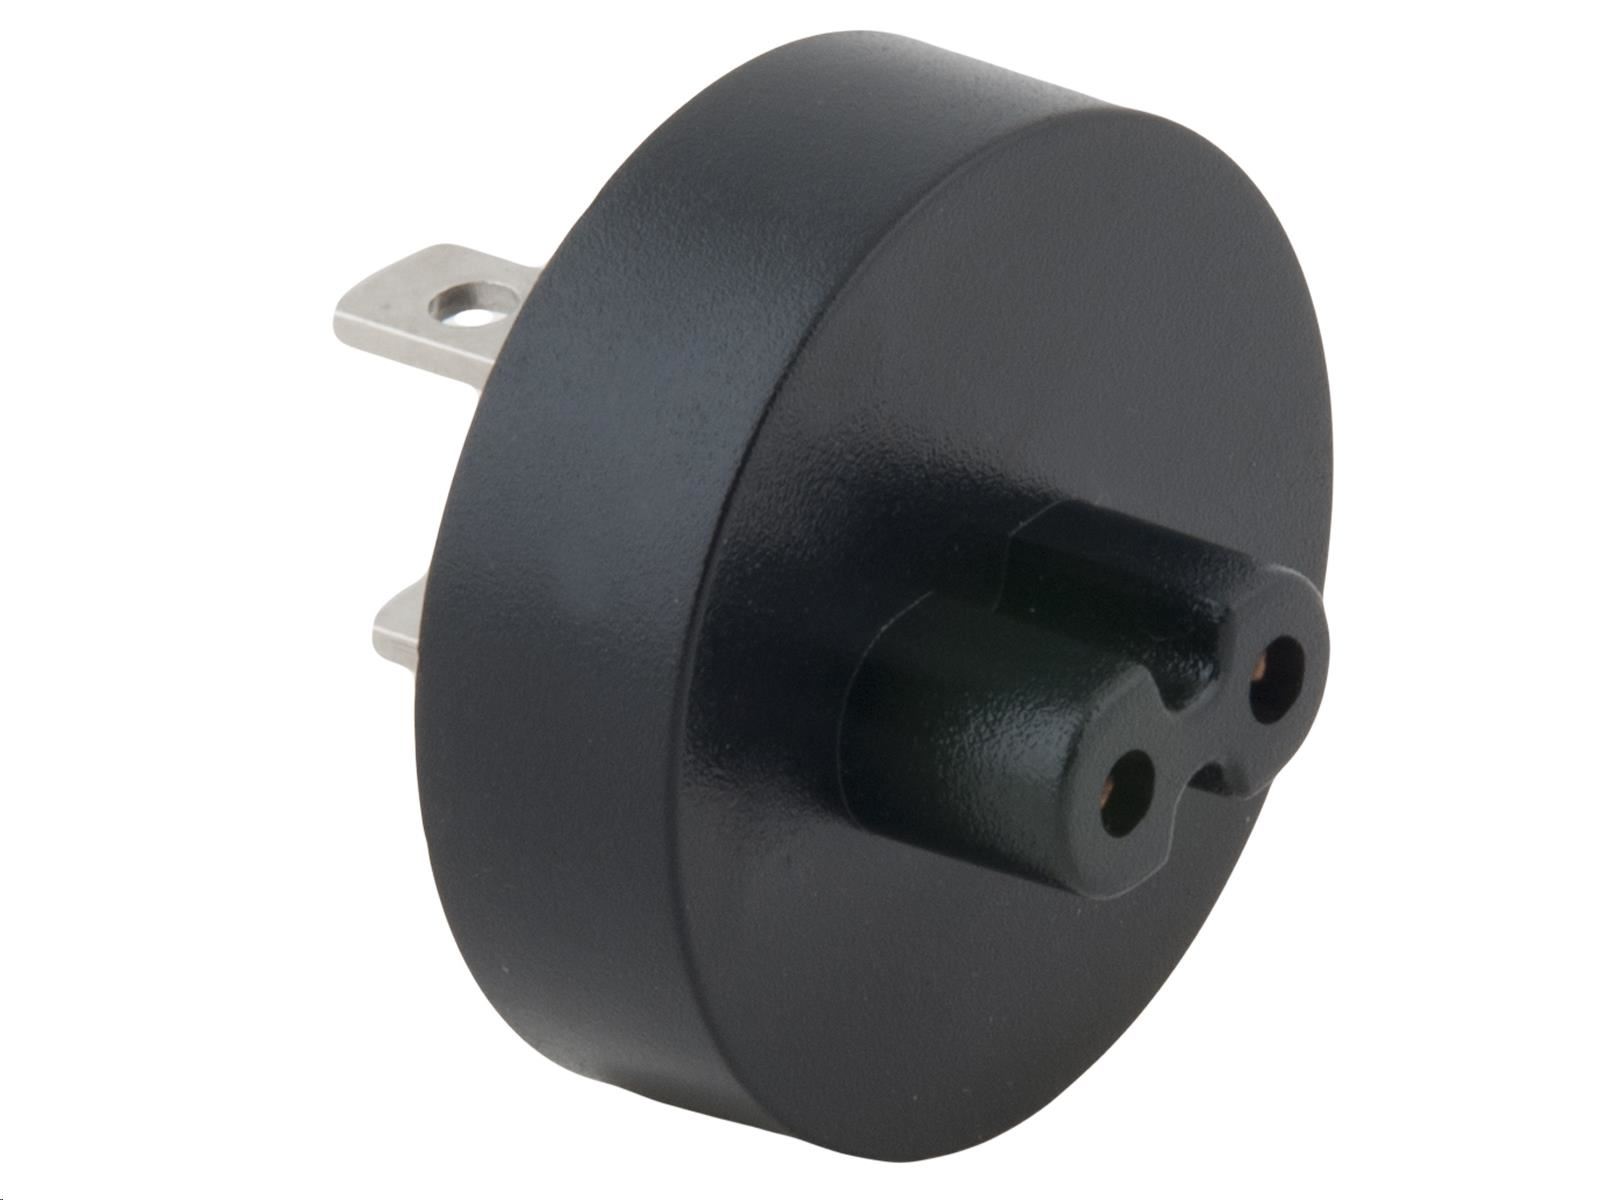 AVACOM Zásuvkový konektor Typ A (US) pro USB-C nabíječky,  černá0 